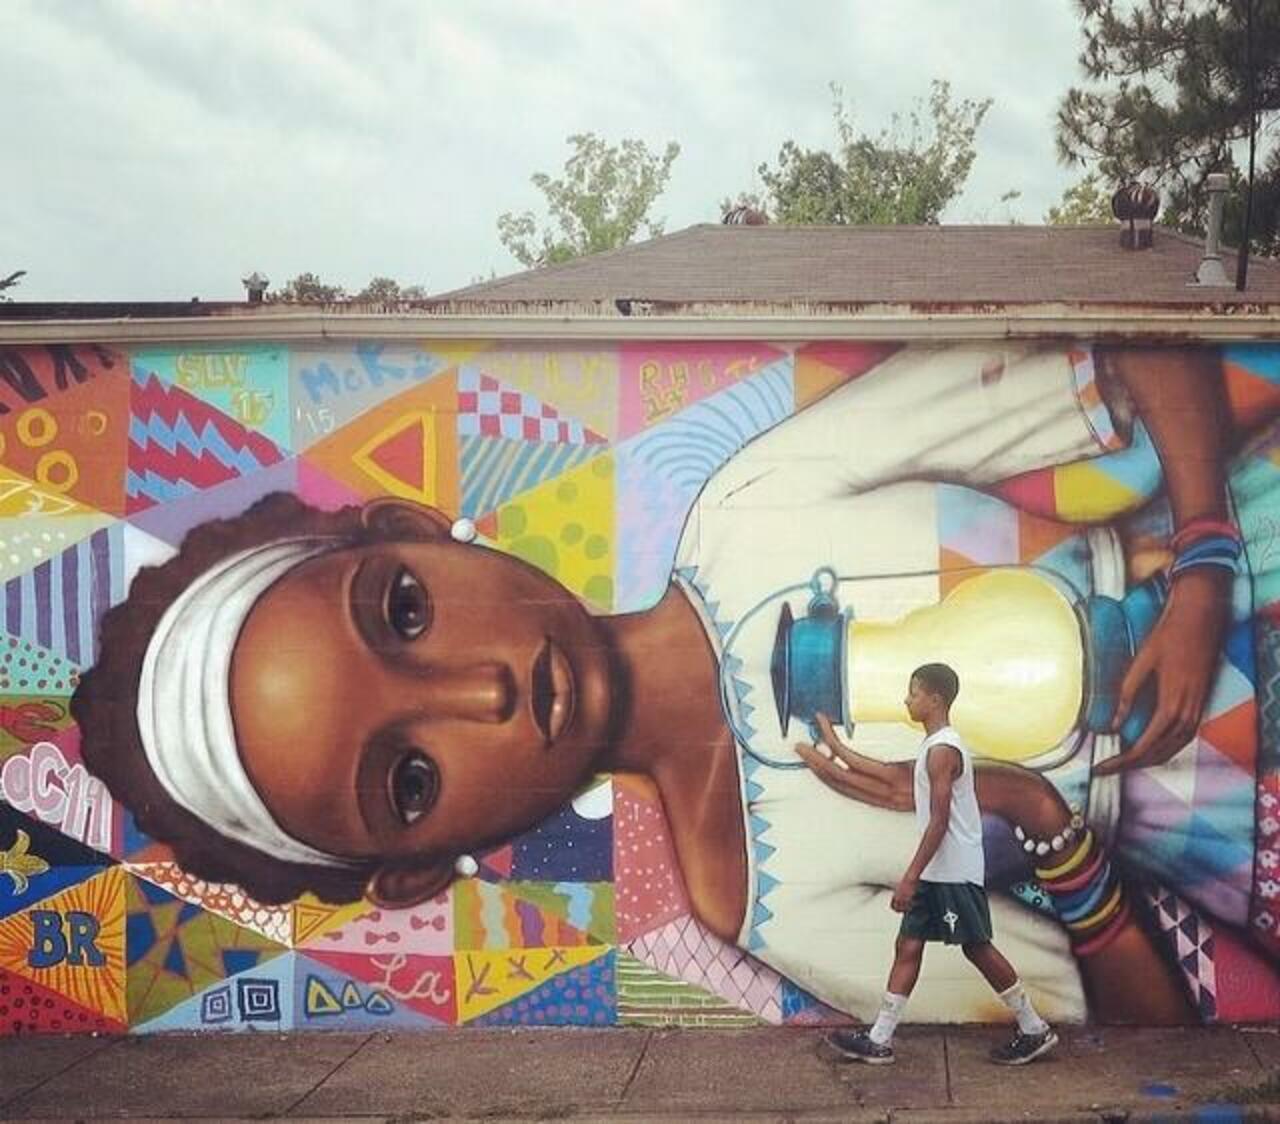 Artist #Seth recent wonderful Street Art wall in Baton Rouge, Louisiana, USA #art #mural #graffiti #streetart https://t.co/N4GF9XdXPa